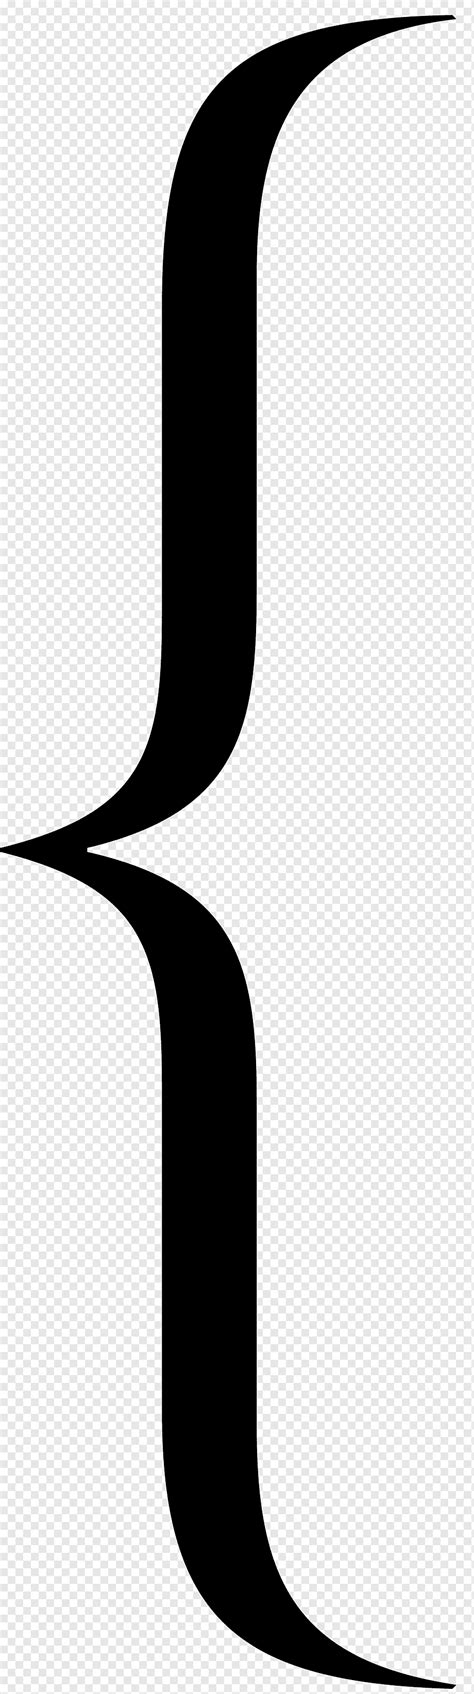 Bracket Symbol Parenthesis Computer Icons Bracket Angle Monochrome